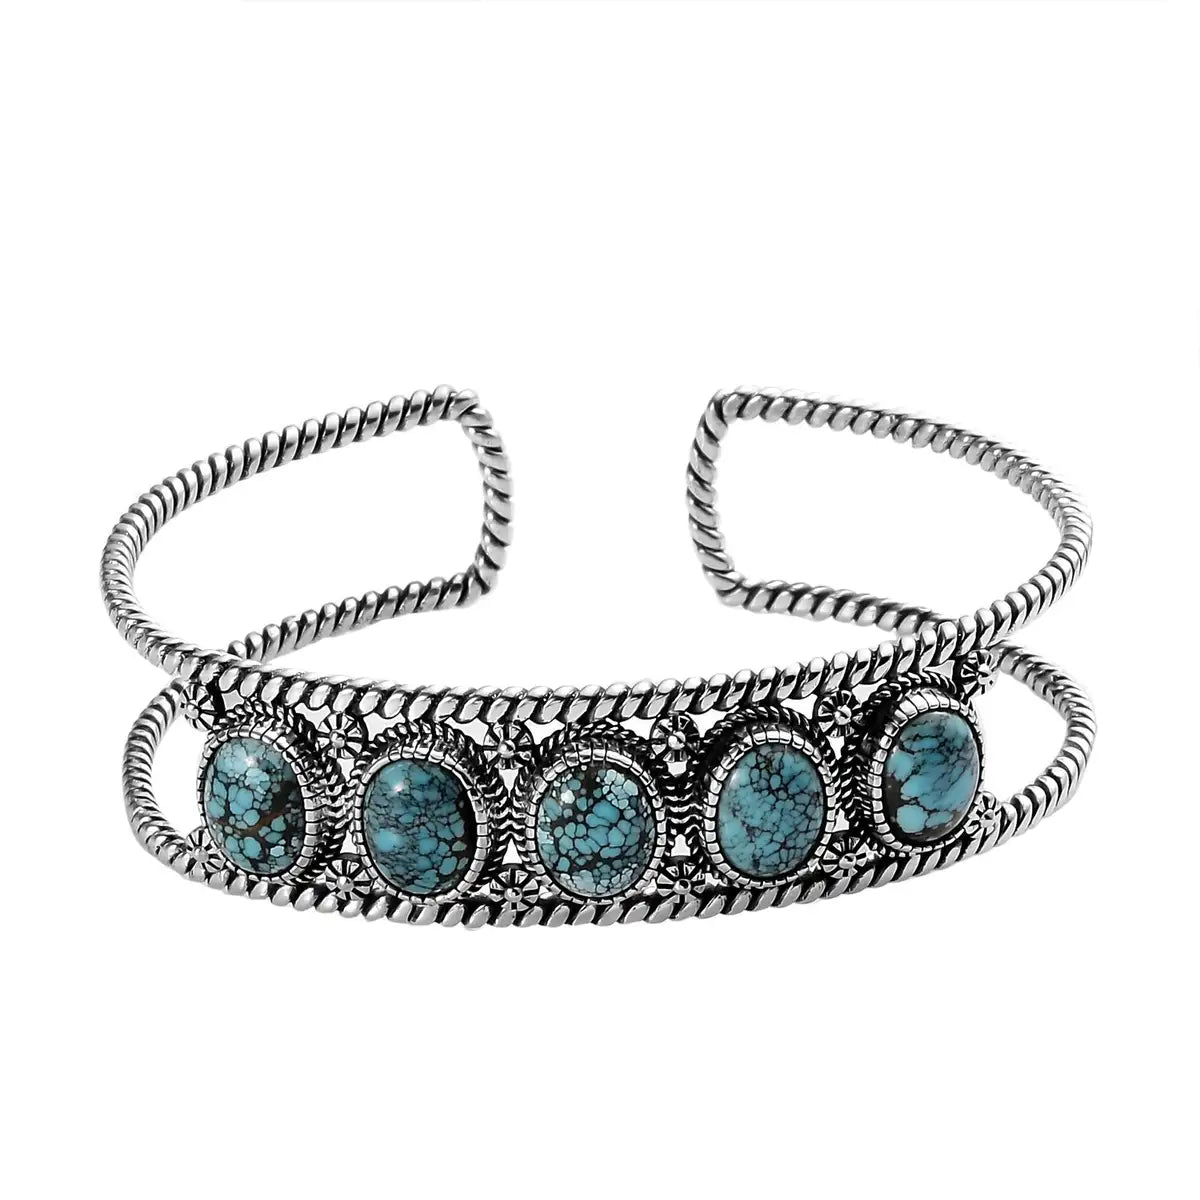 Native American Turquoise Cuff Bracelet  - Sterling Silver Bracelet - Southwestern Bracelets